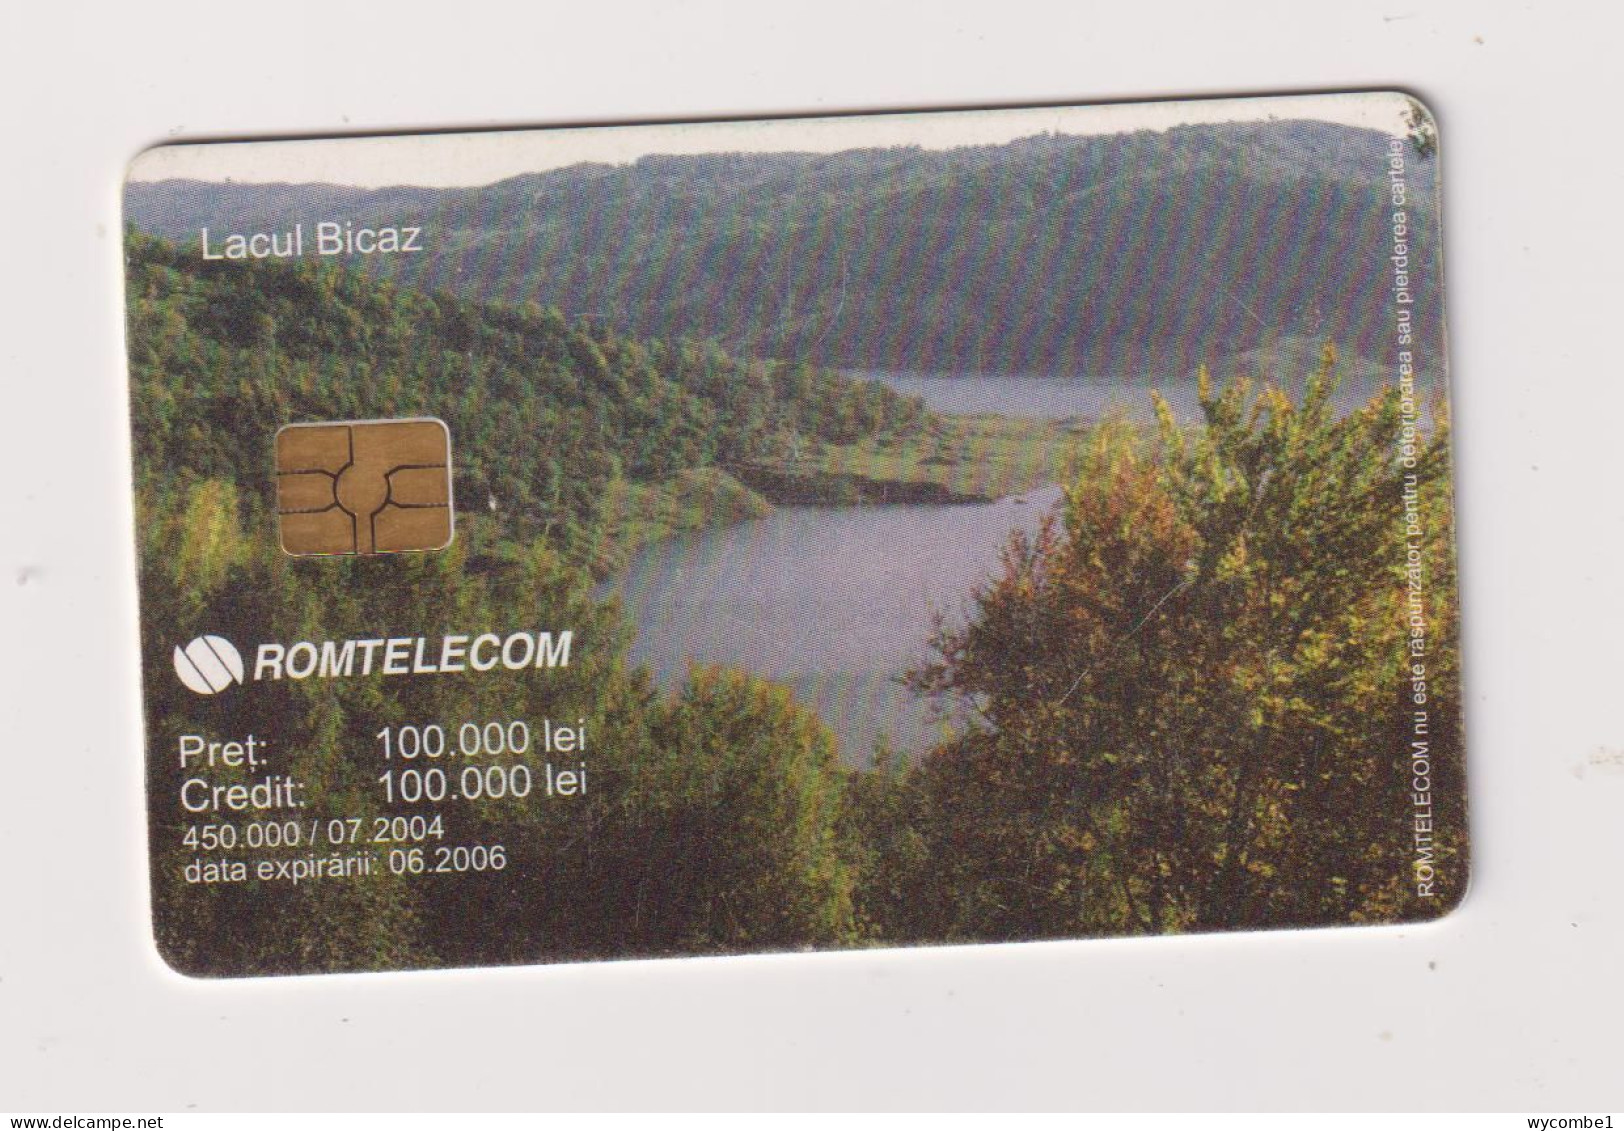 ROMANIA - Lacul Bicaz Chip  Phonecard - Romania